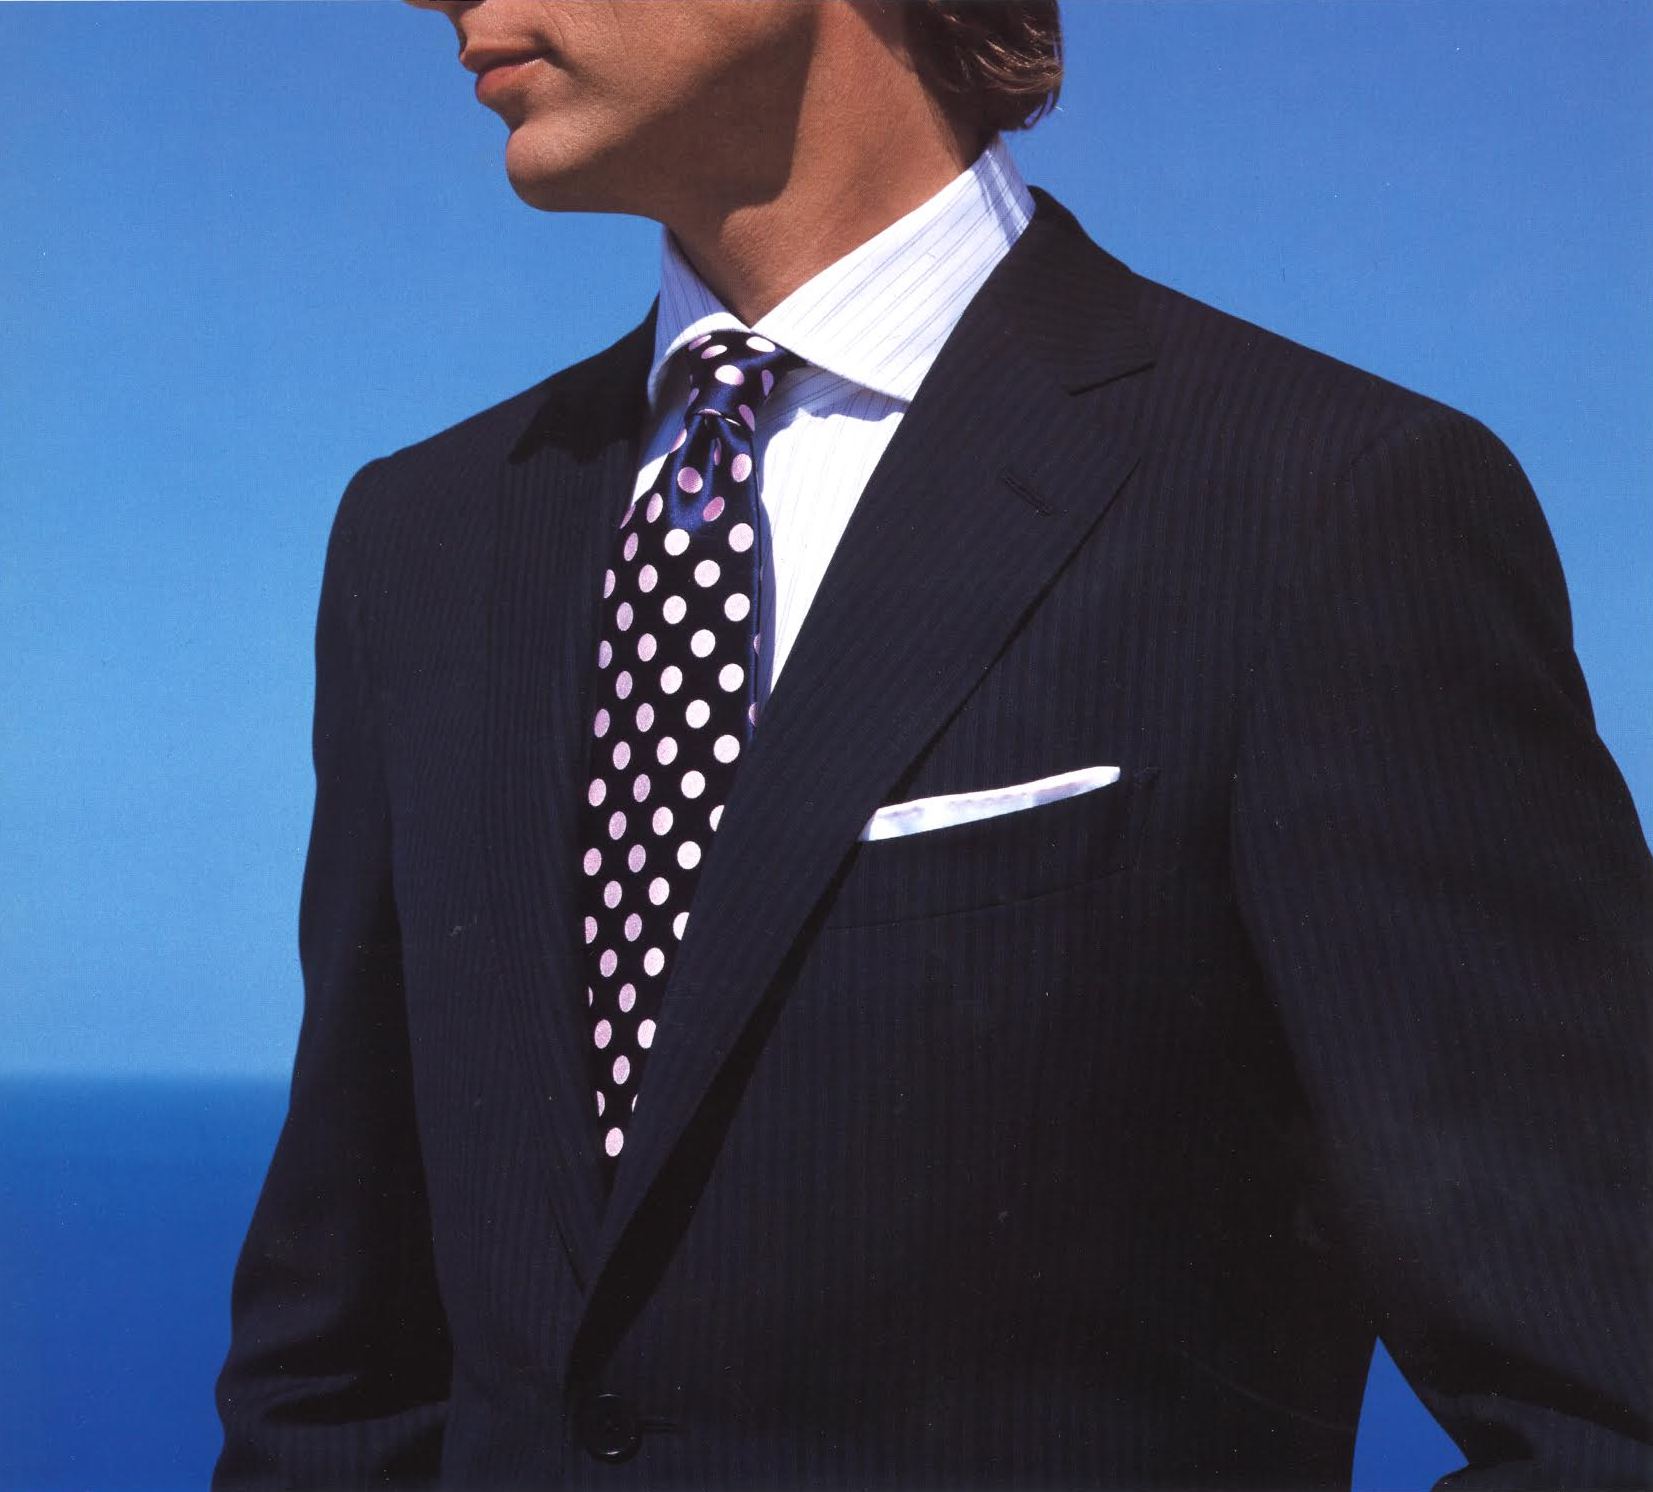 tie for cocktail attire